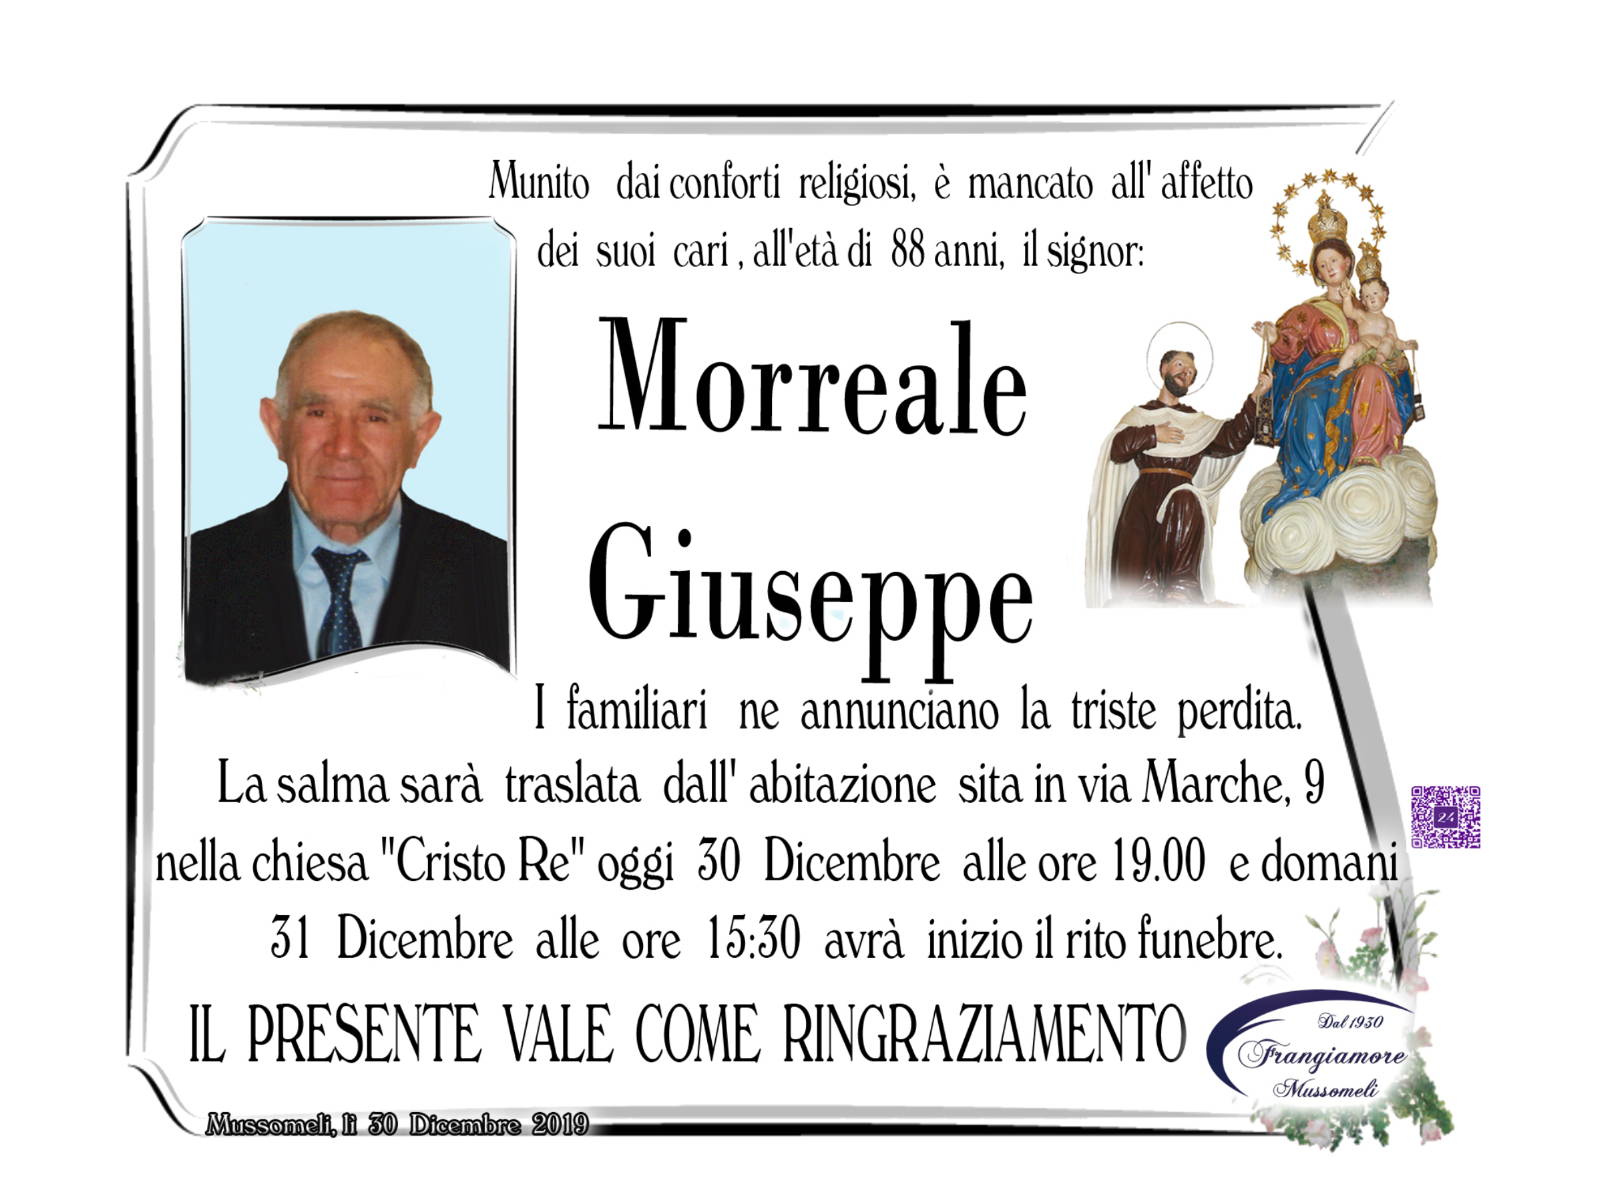 Giuseppe Morreale